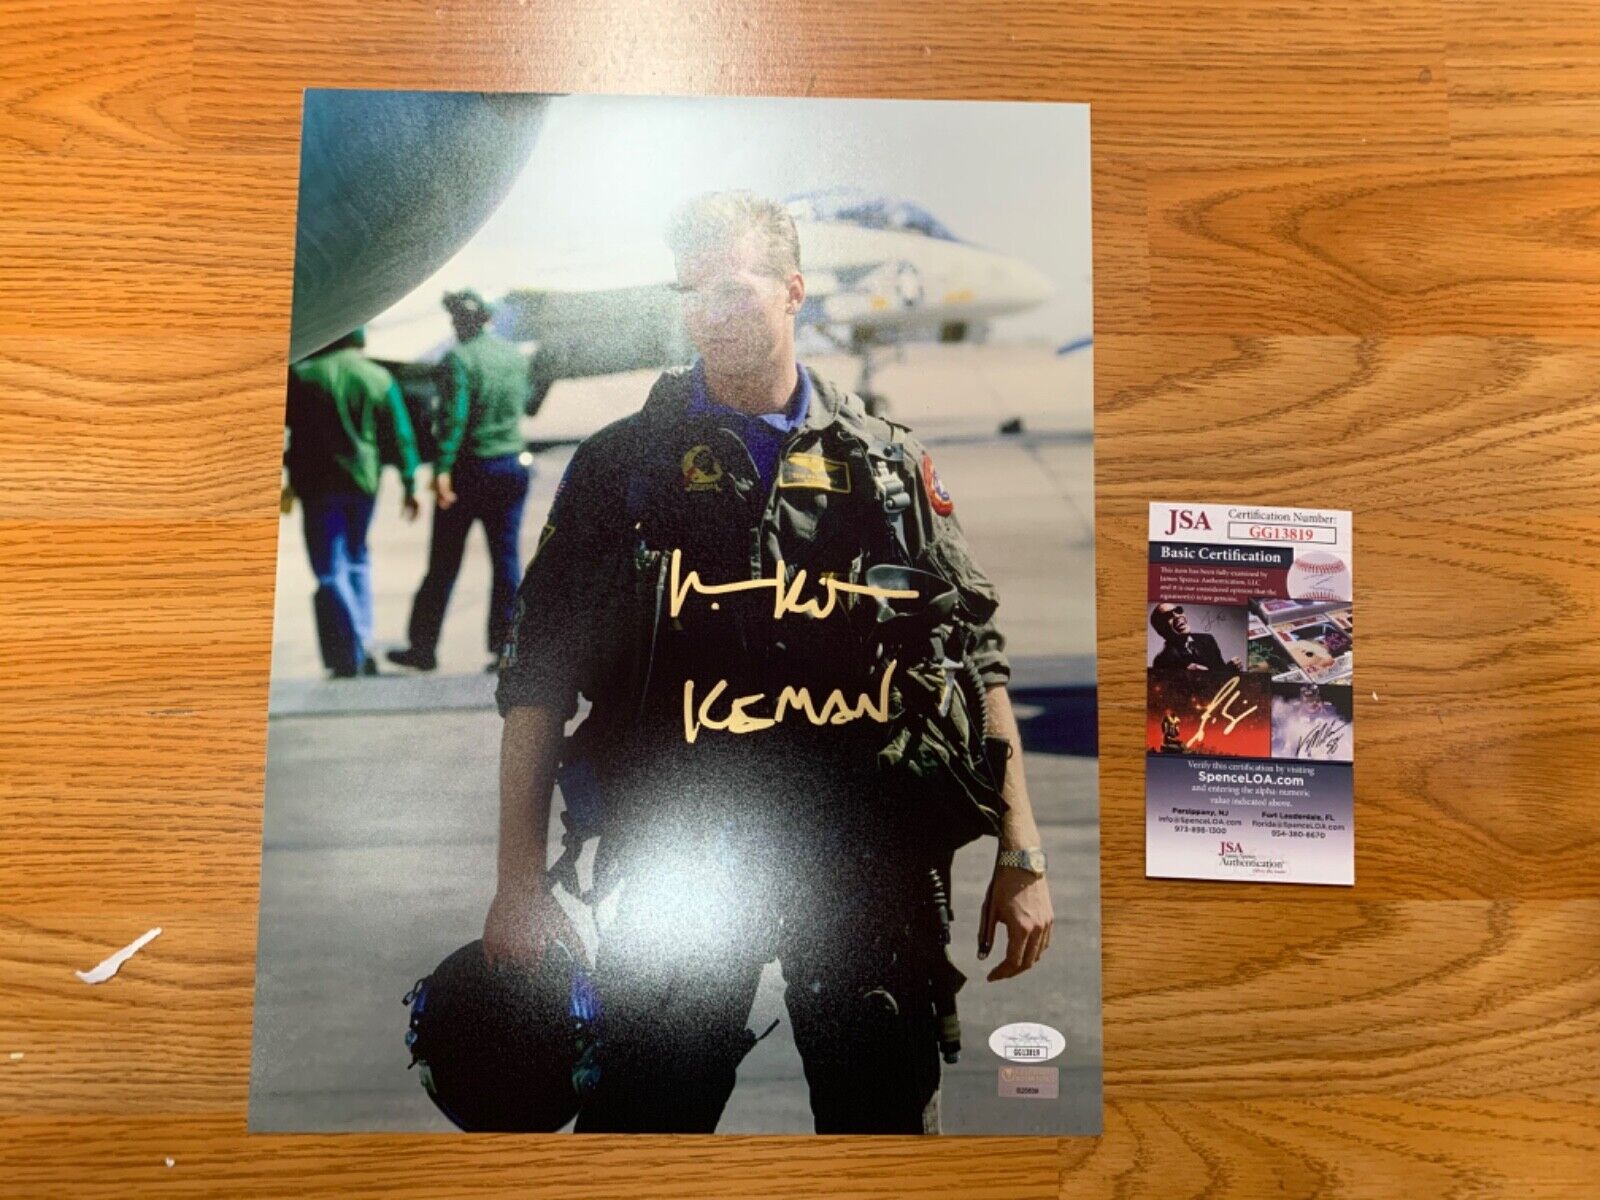 Val Kilmer Iceman From Top Gun Autographed 11x14 Photo JSA Celebrity C